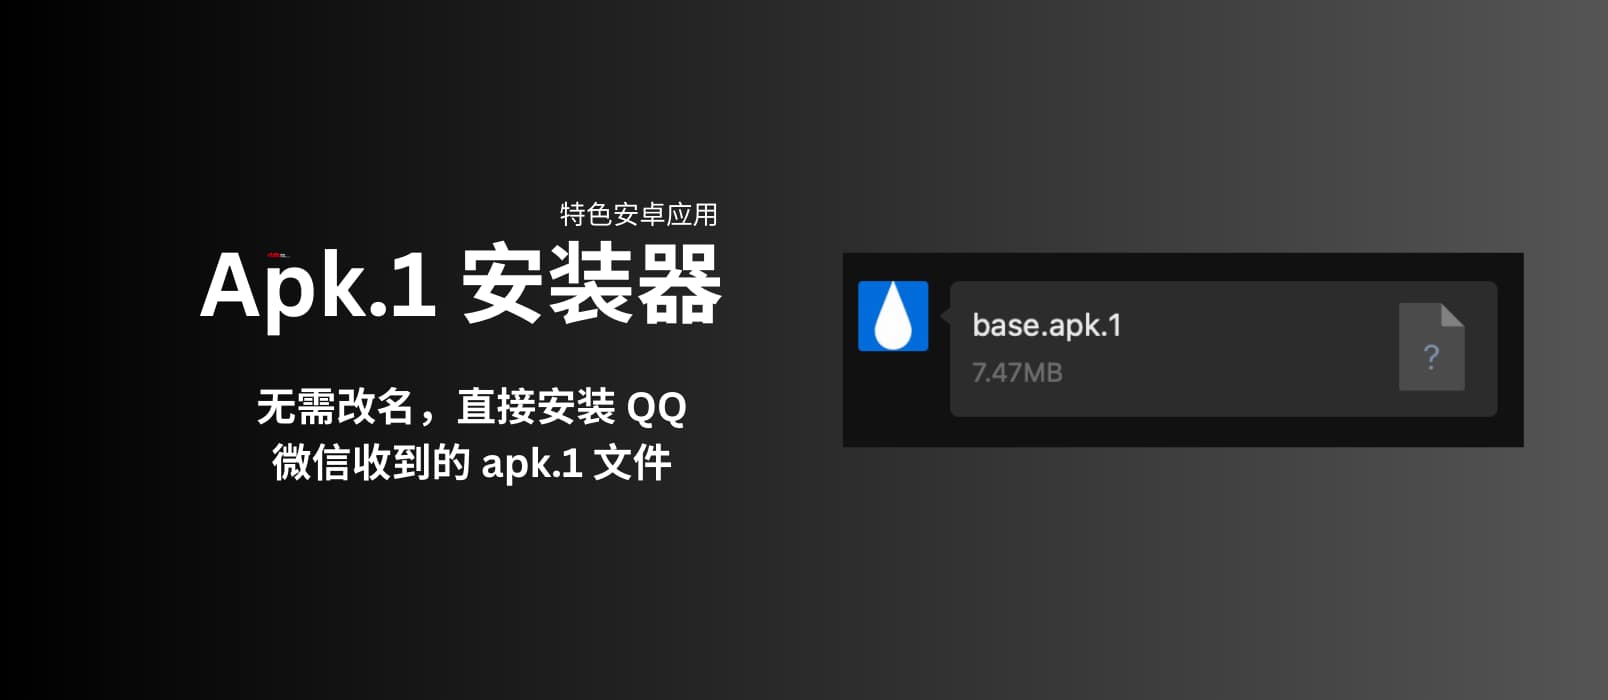 Apk.1 安装器 – 特色安卓应用：无需改名，直接安装 QQ、微信收到的 apk.1 文件